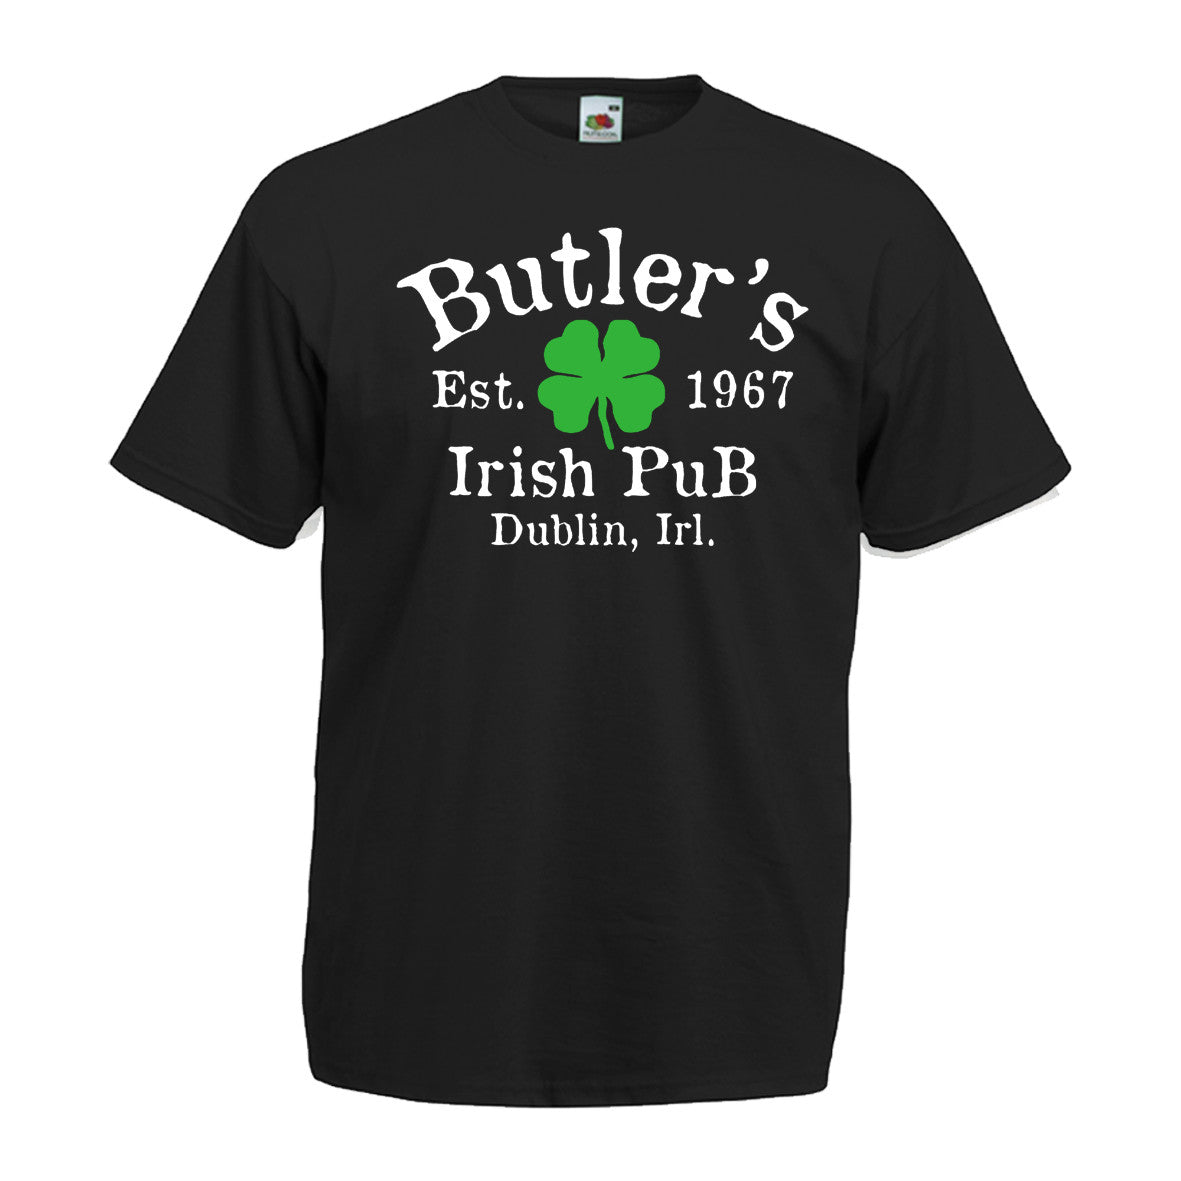 Irish Pub with Family Name